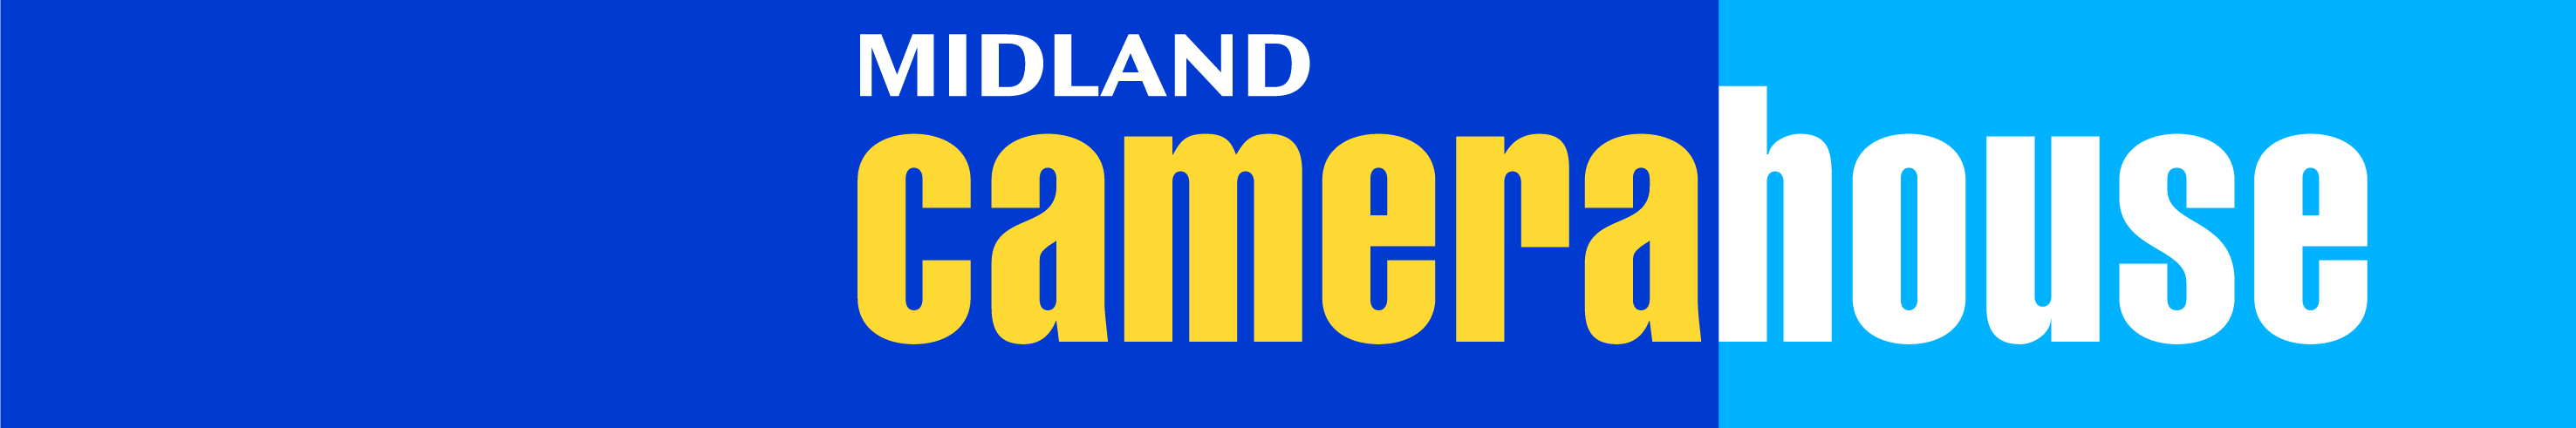 Midland Camerahouse logo